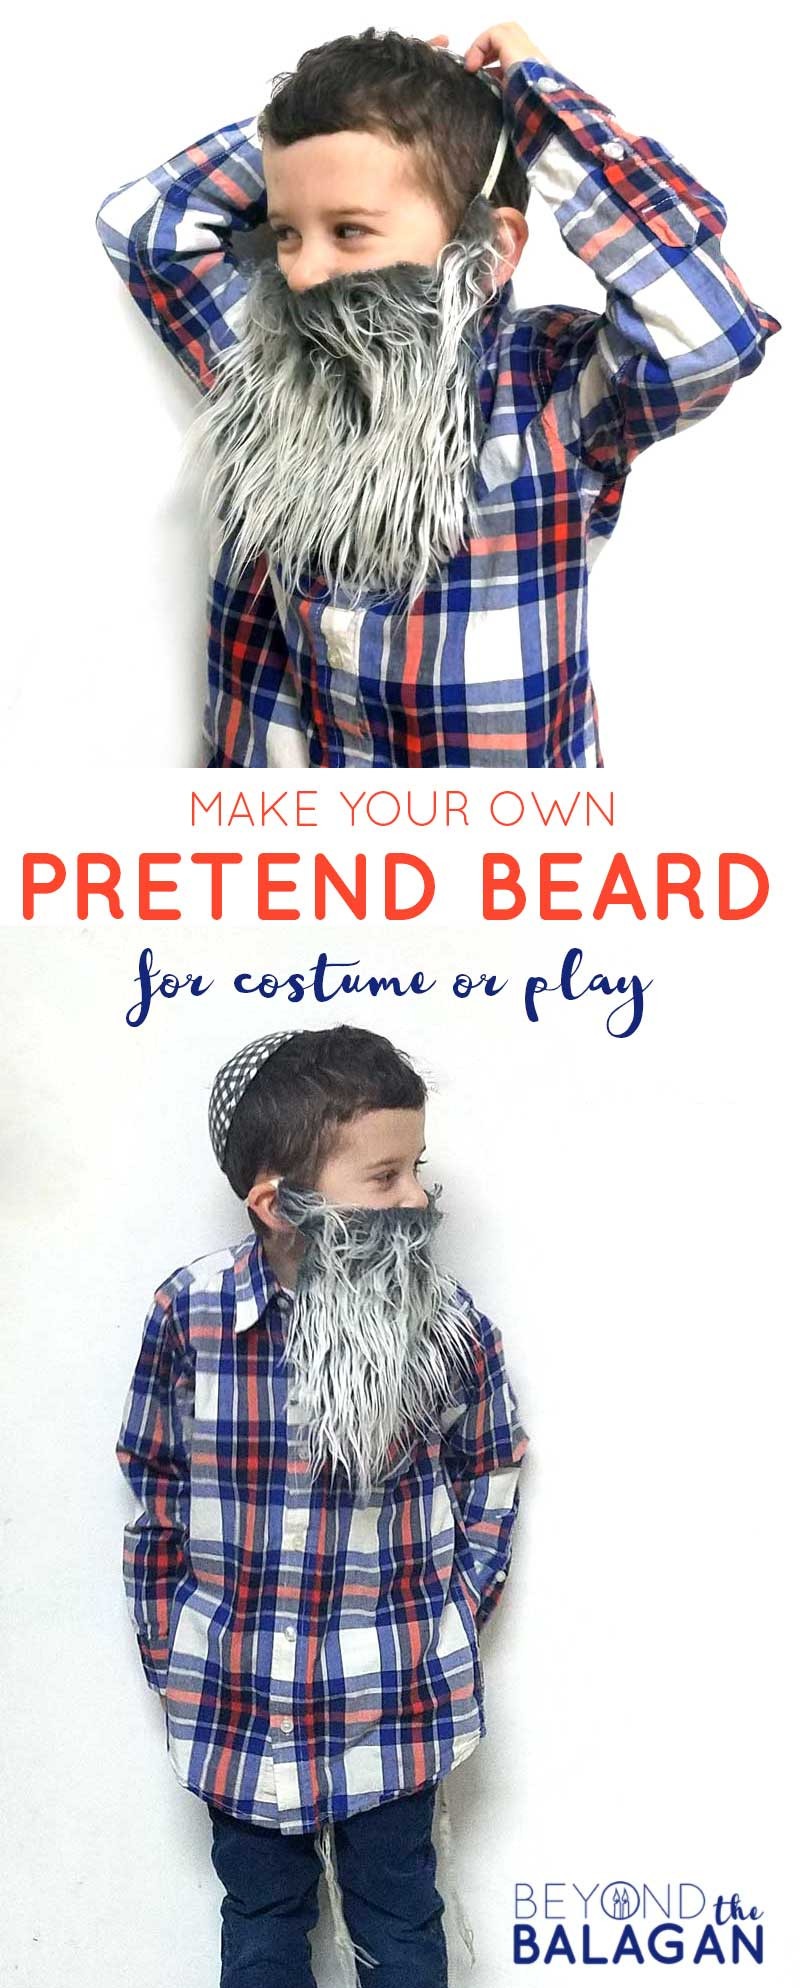 Best ideas about DIY Beard Costume
. Save or Pin Fake Beard DIY Costume Beard for Kids Beyond the Balagan Now.